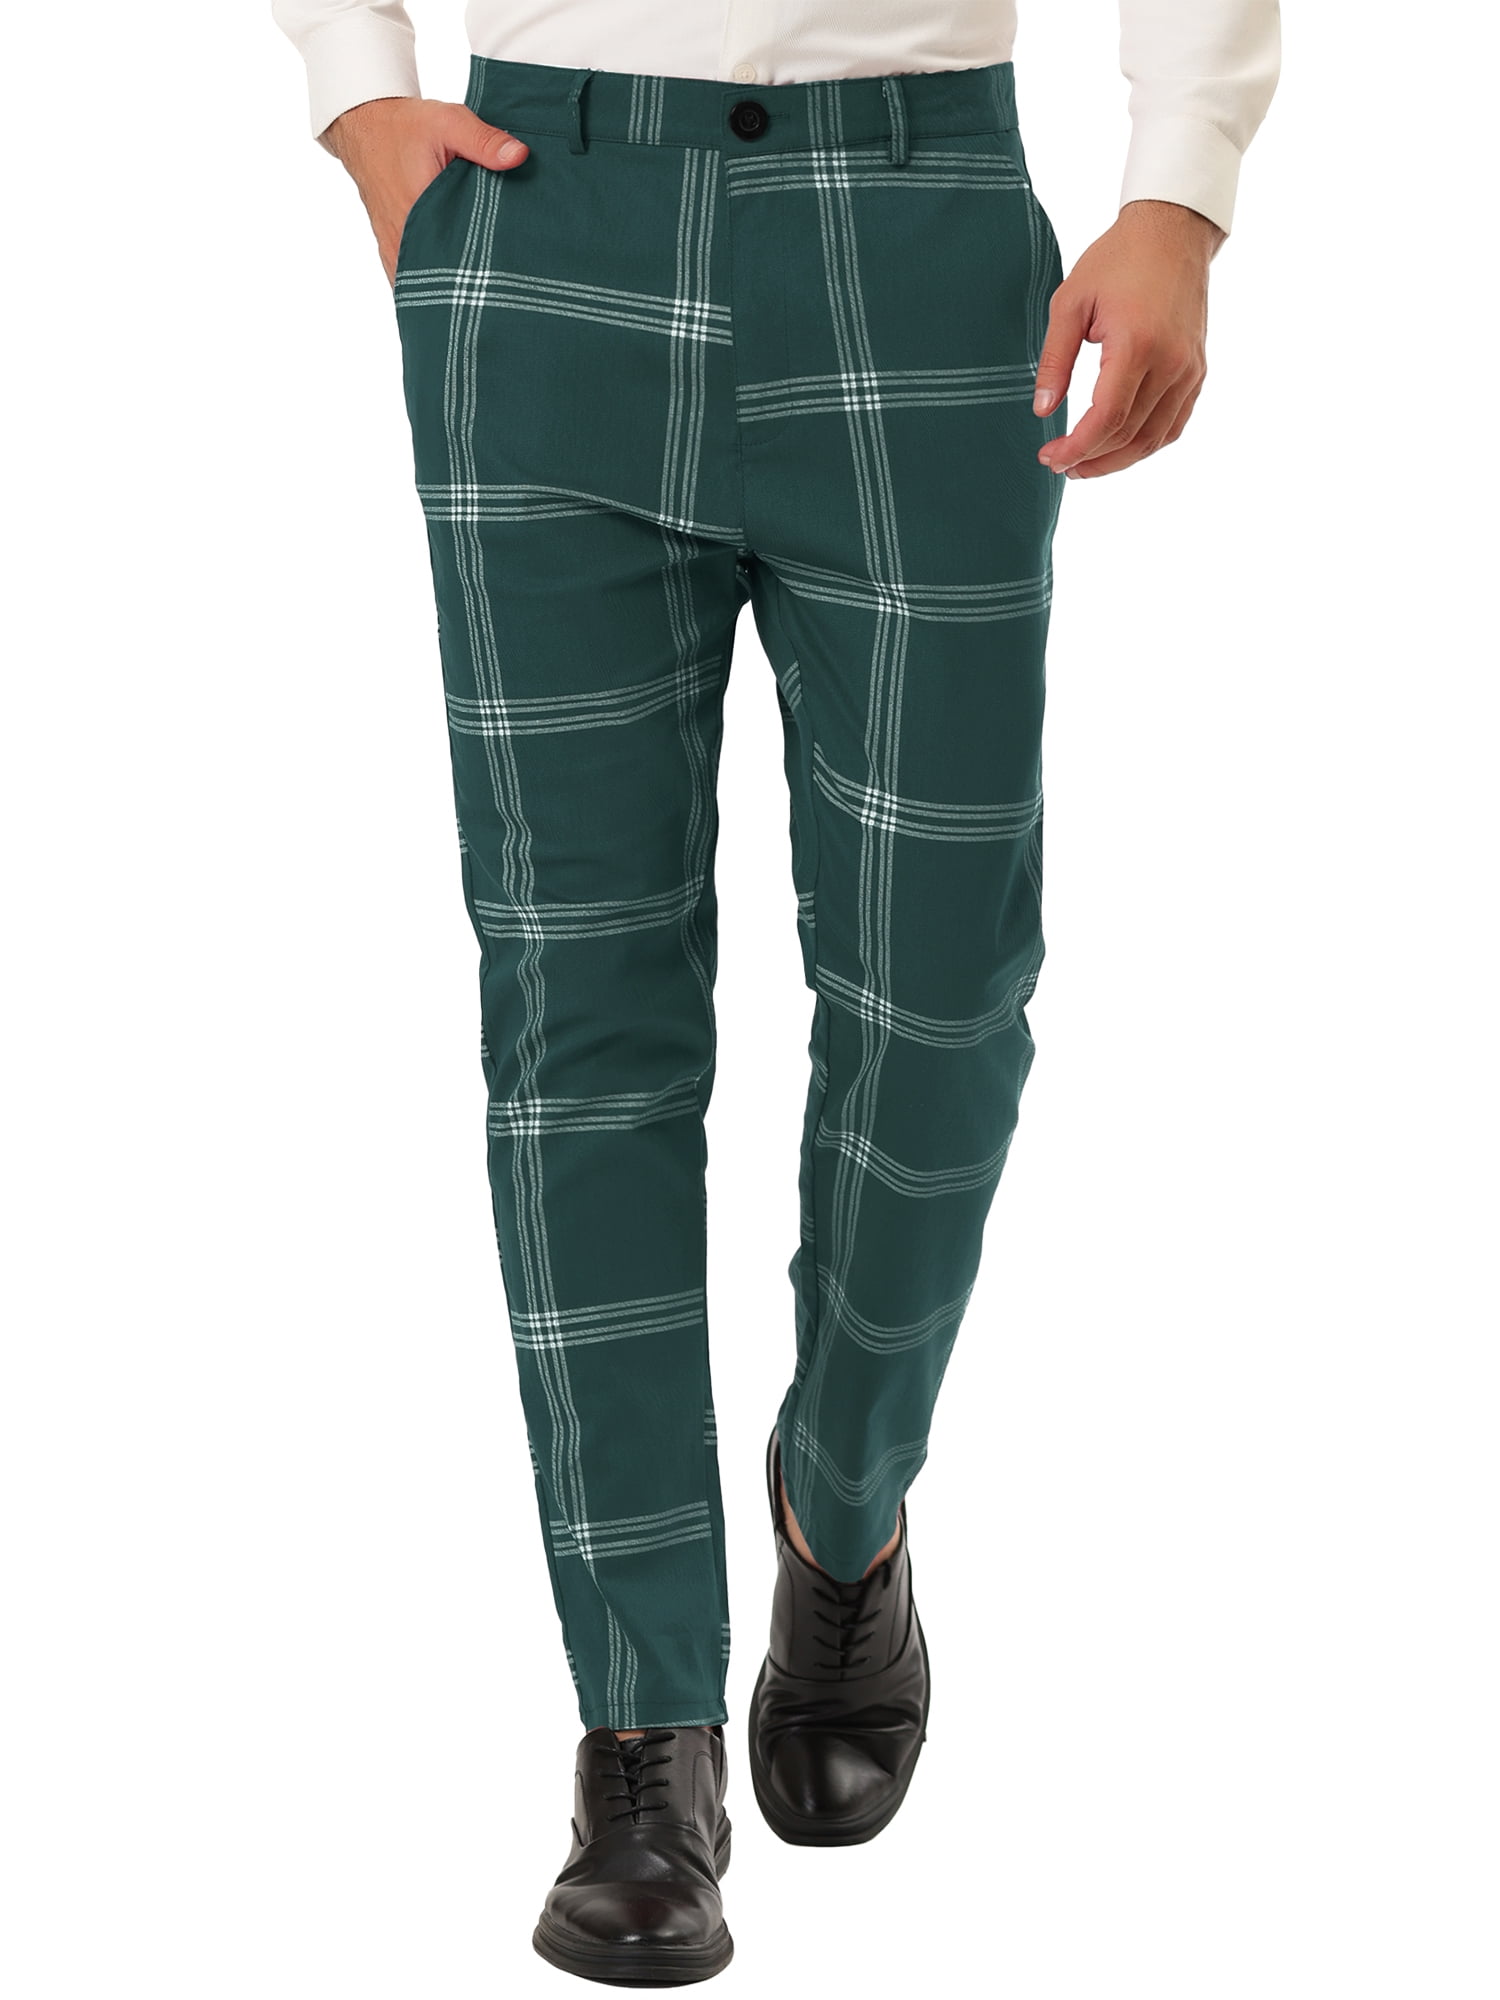 MODA NOVA Big & Tall Men's Plaid Dress Pants Slim Fit Checked Printed Pants  Green LT(US 36) 